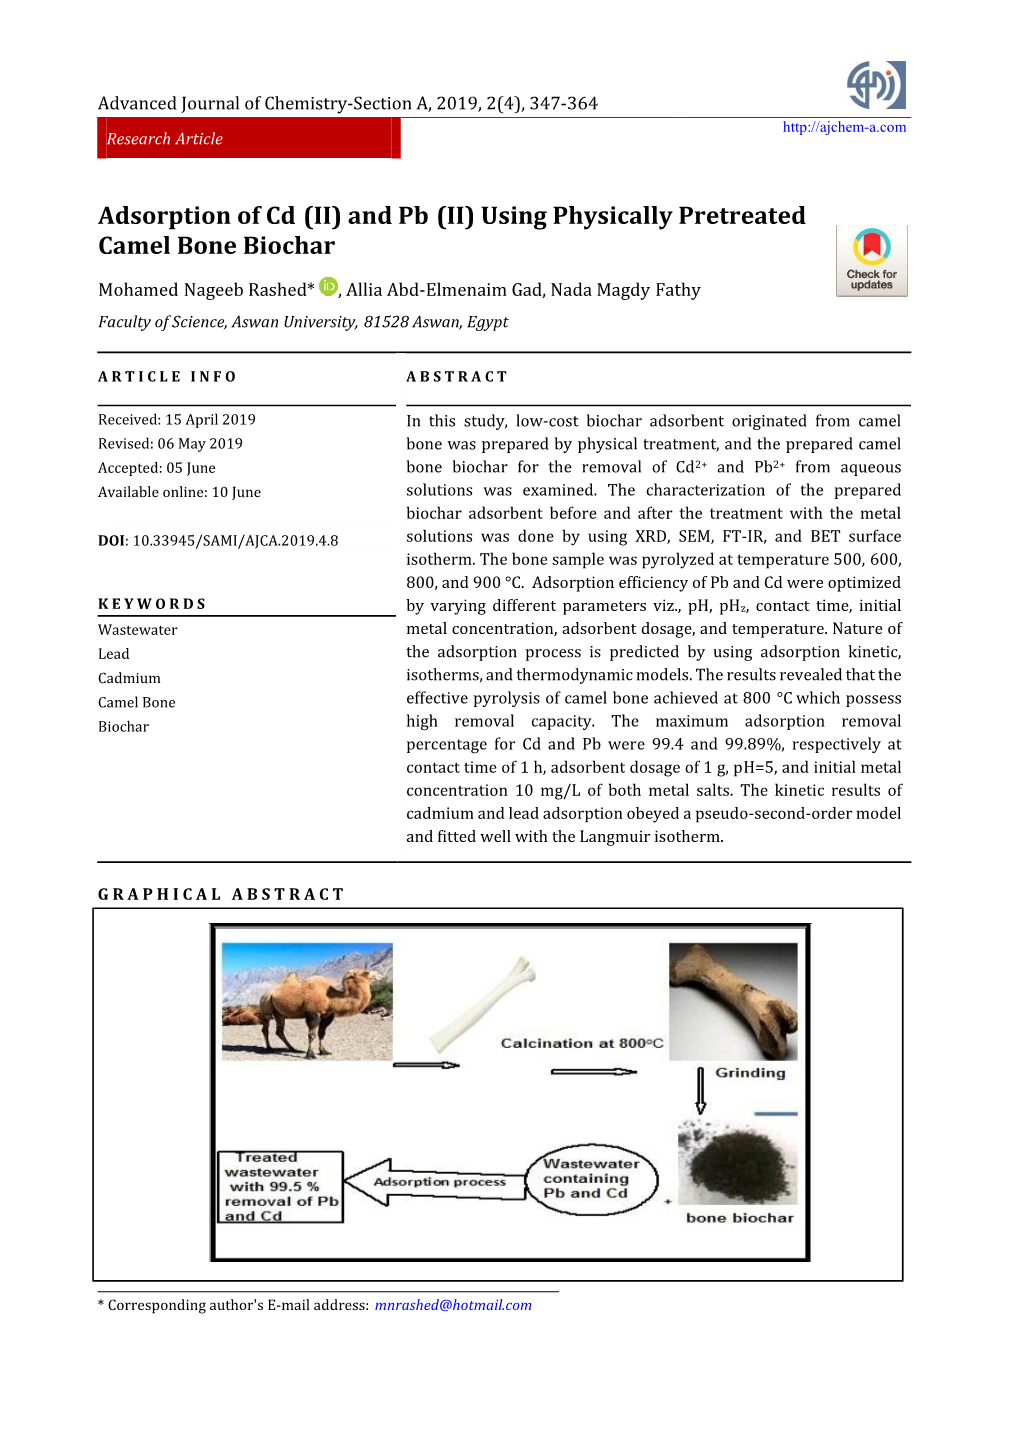 Adsorption of Cd (II) and Pb (II) Using Physically Pretreated Camel Bone Biochar